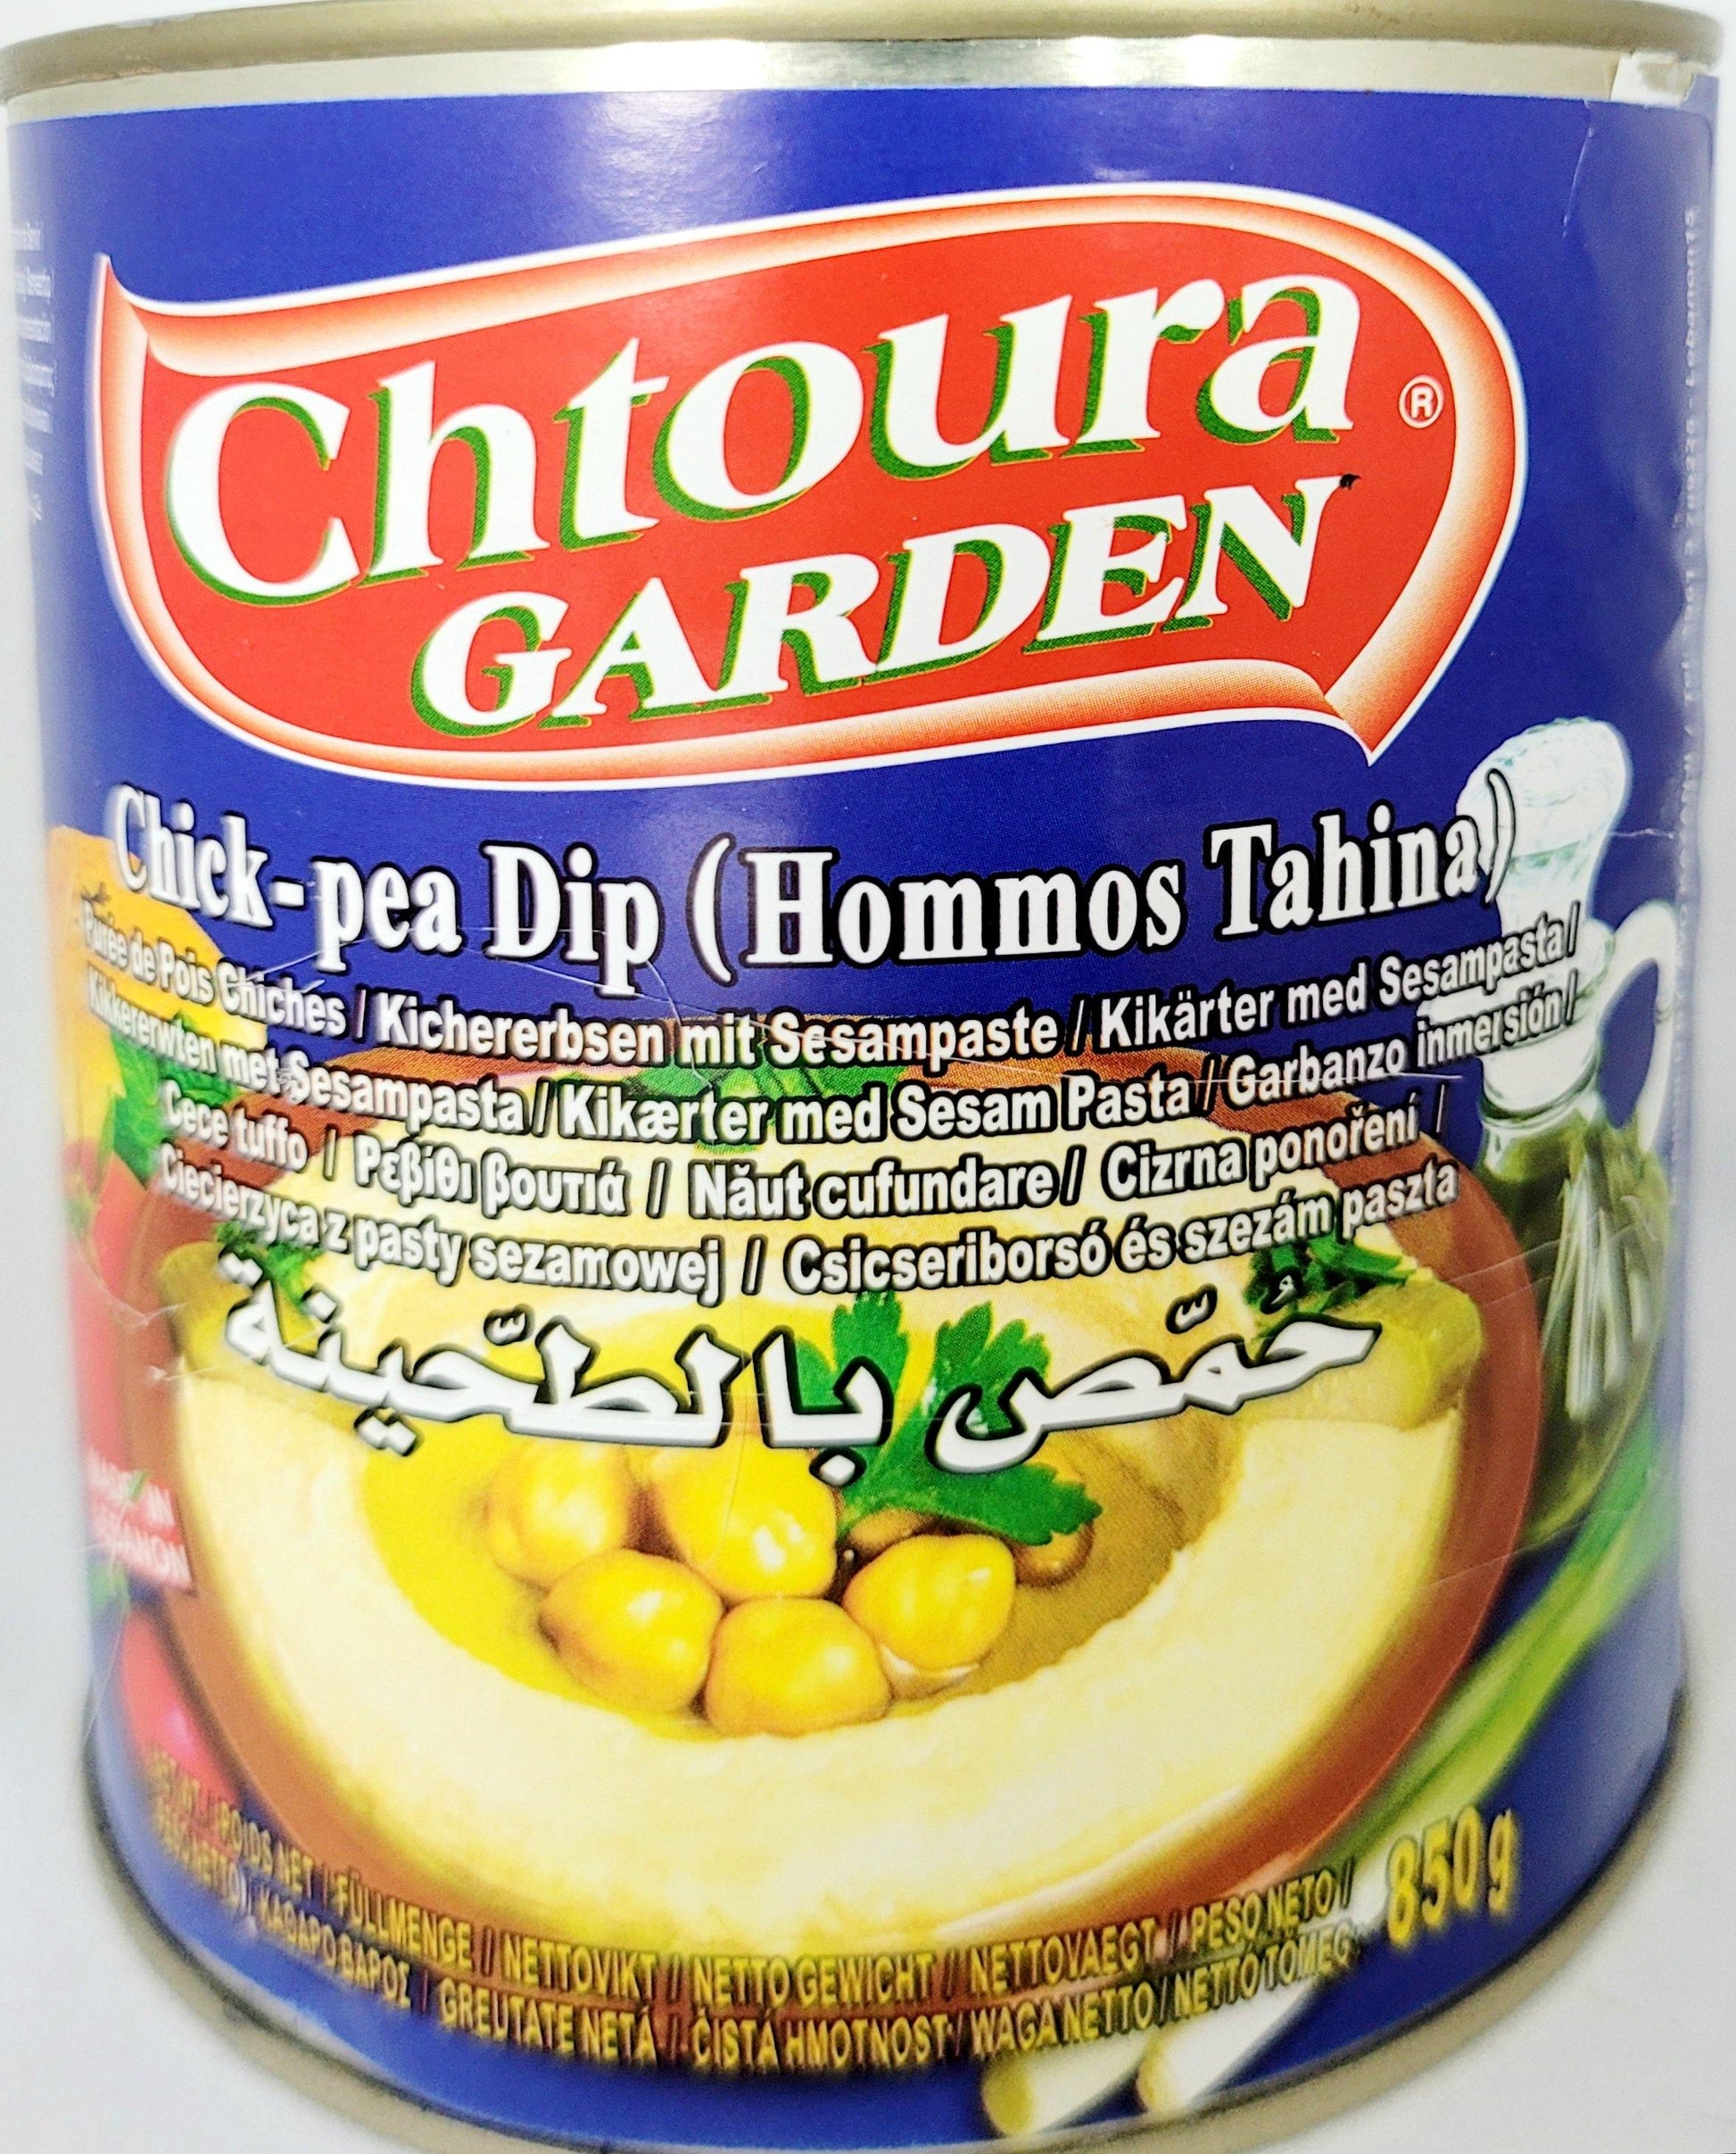 Chtoura Garden Chickpea Dip Hommos Tahina 850g - Arabian Shopping Zone